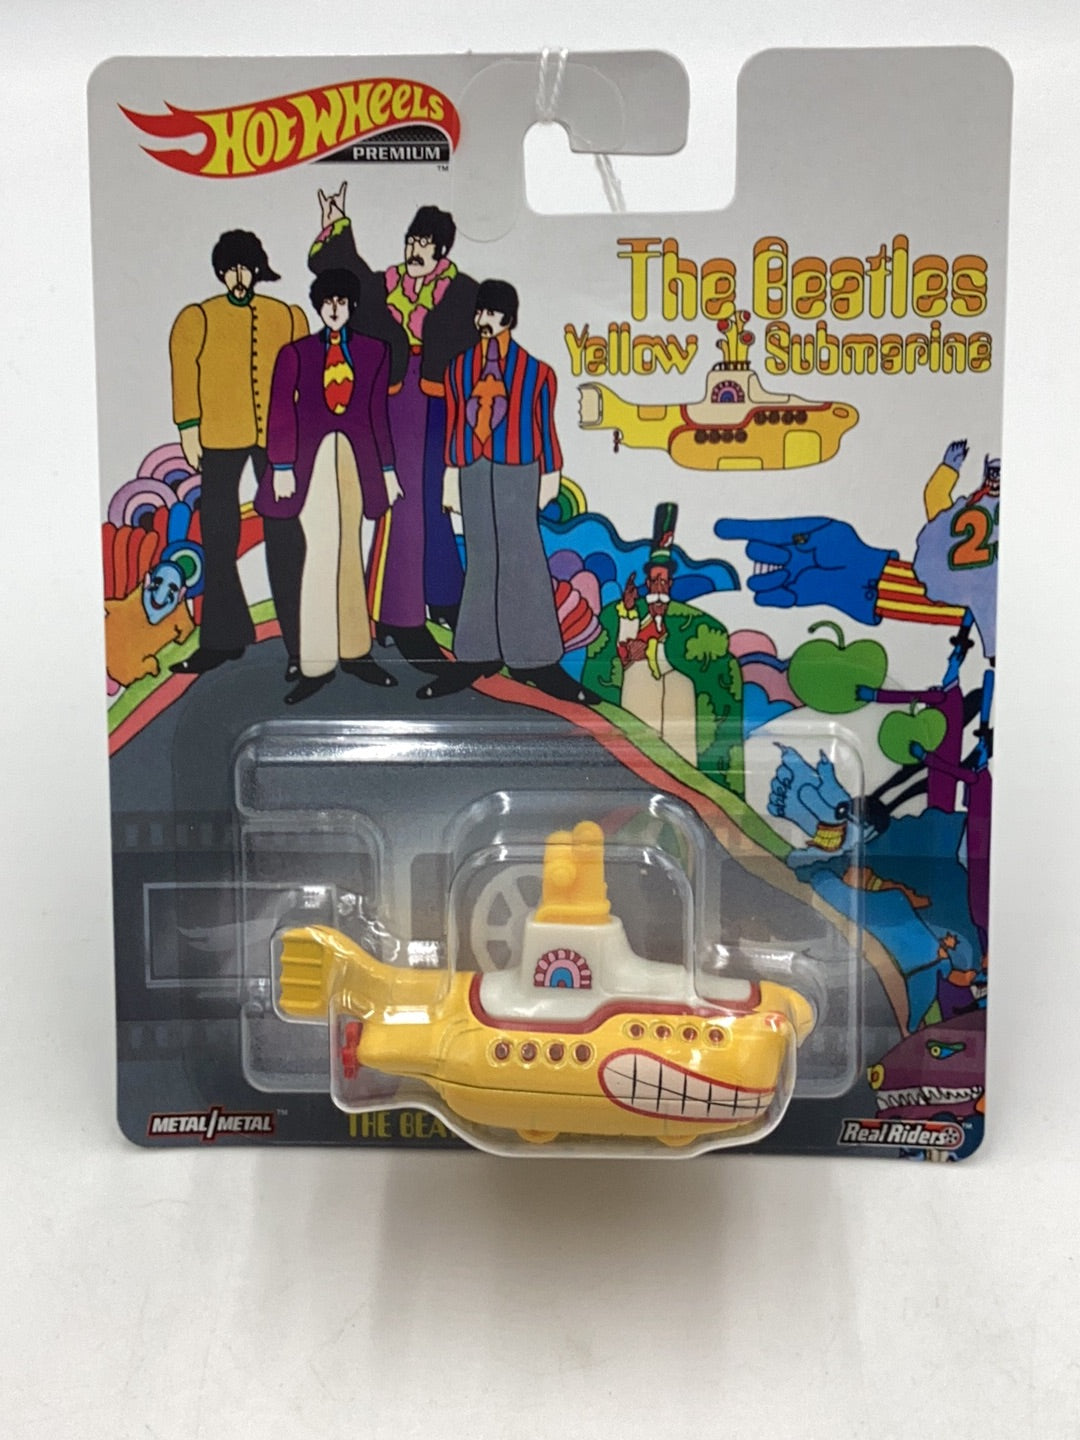 Hot wheels The Beatles Yellow Submarine 269F